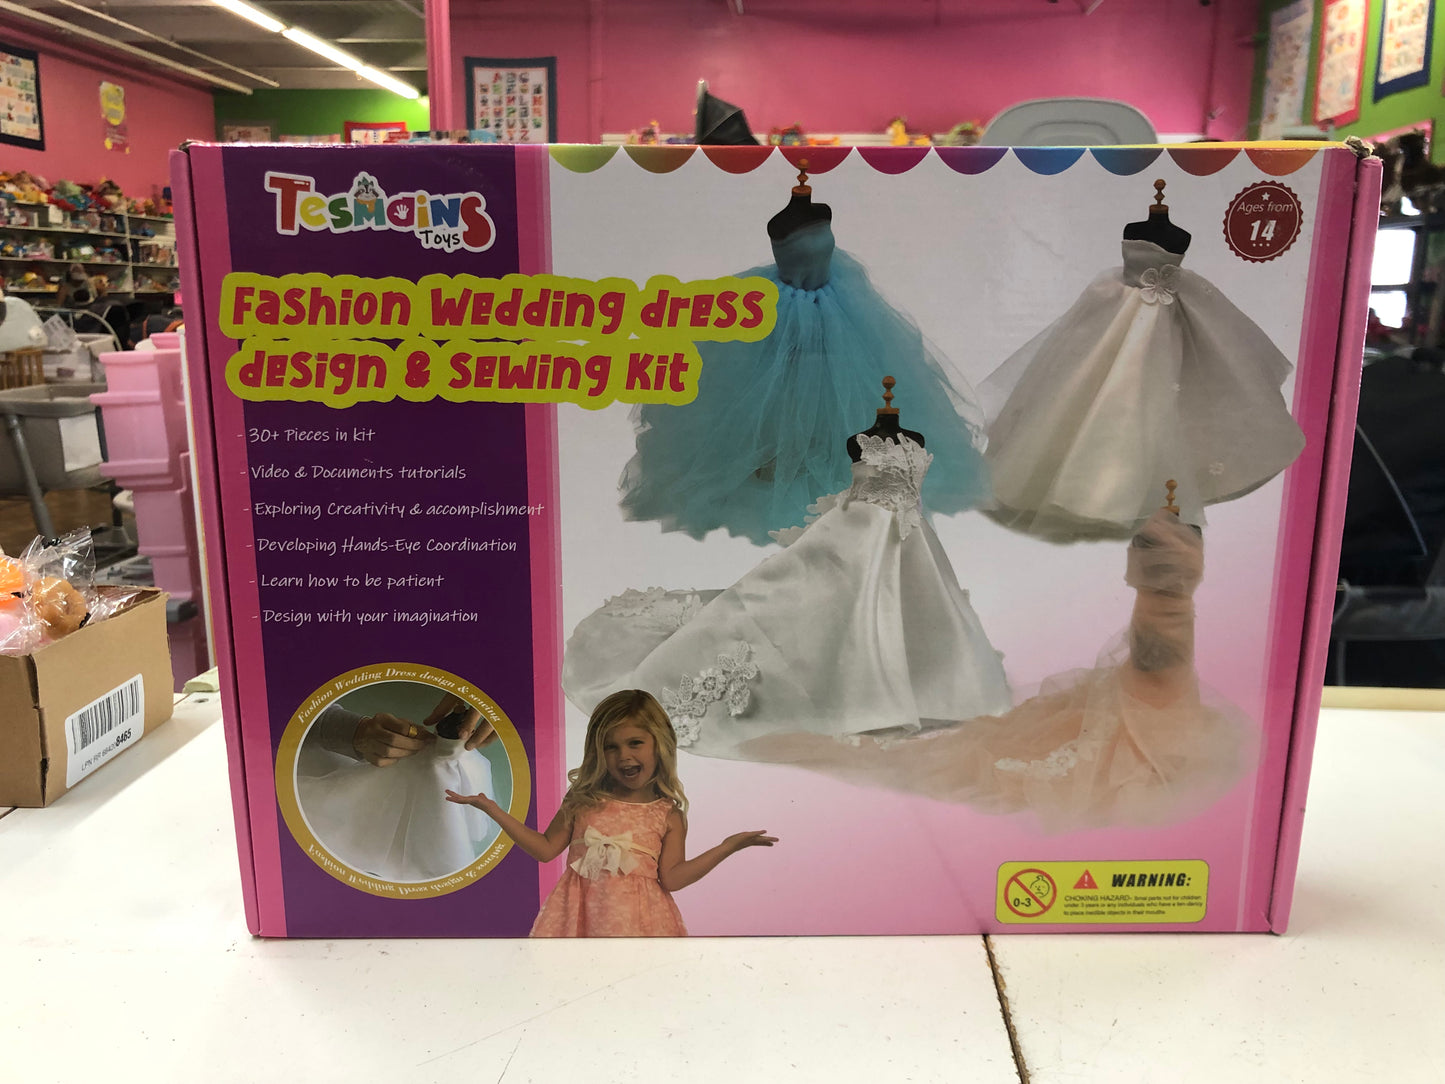 New Tesmains Fashion Wedding Dress Sewing Kit